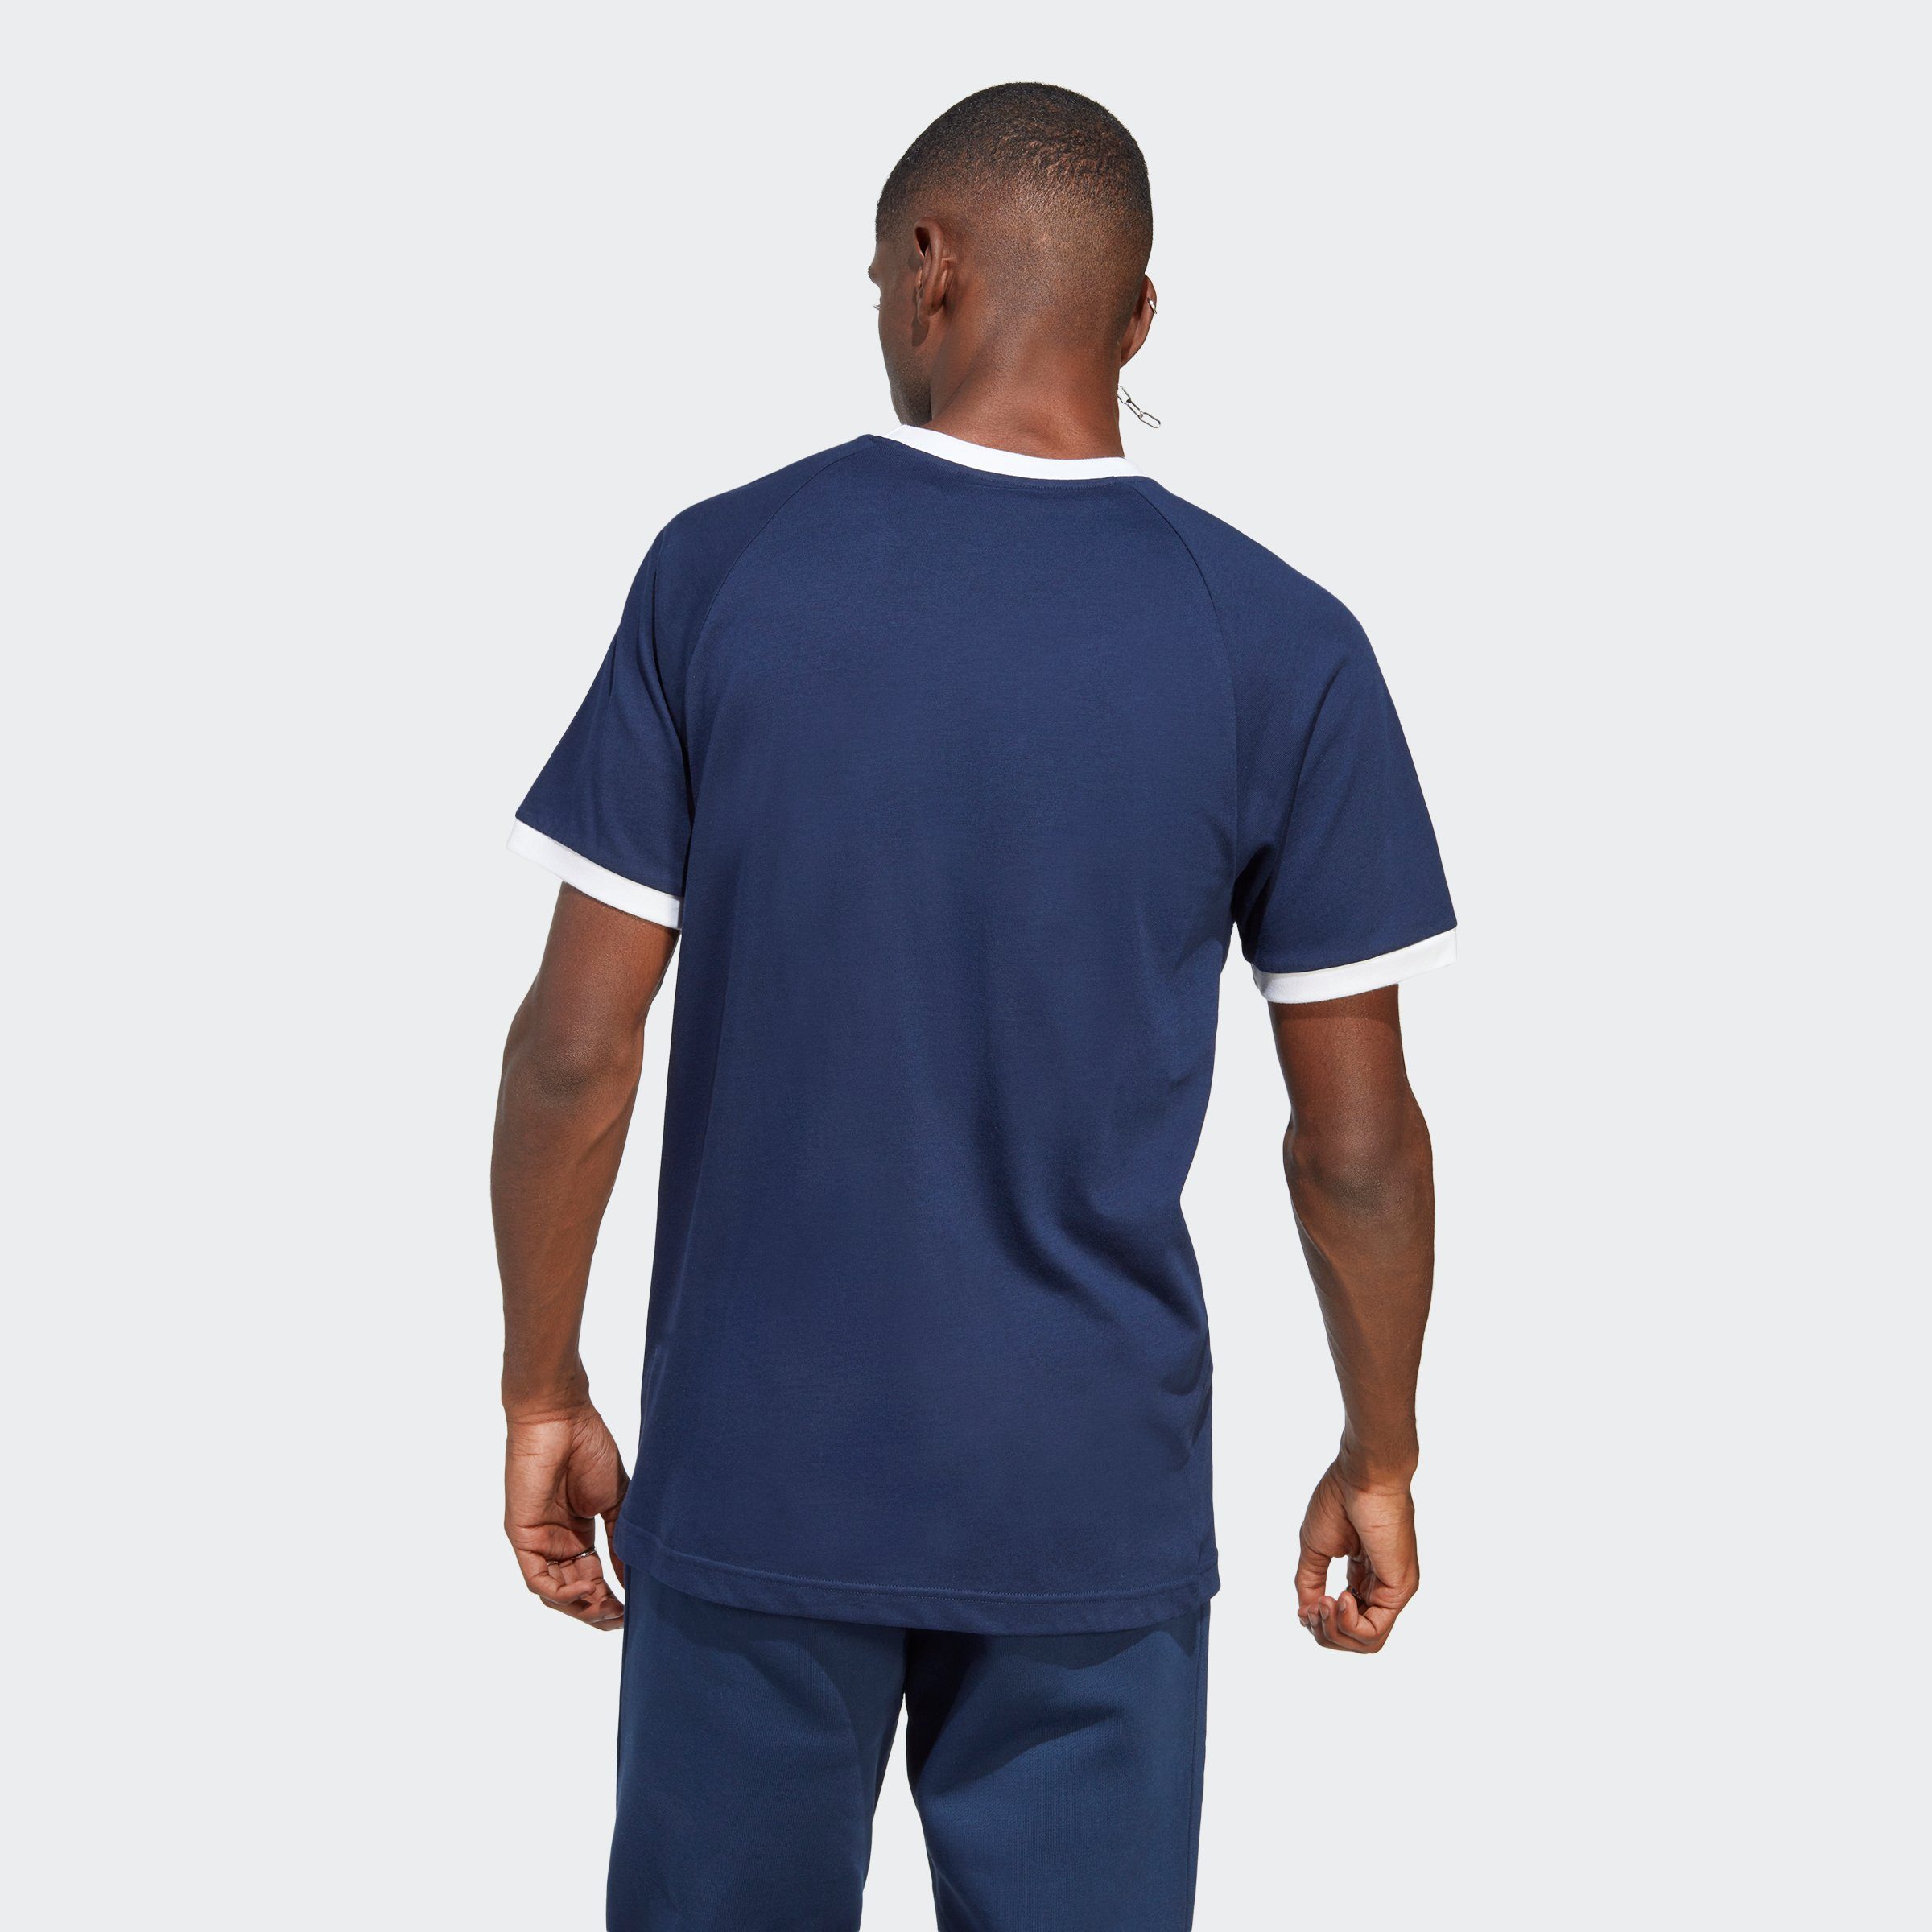 Night adidas Originals TEE T-Shirt Indigo 3-STRIPES